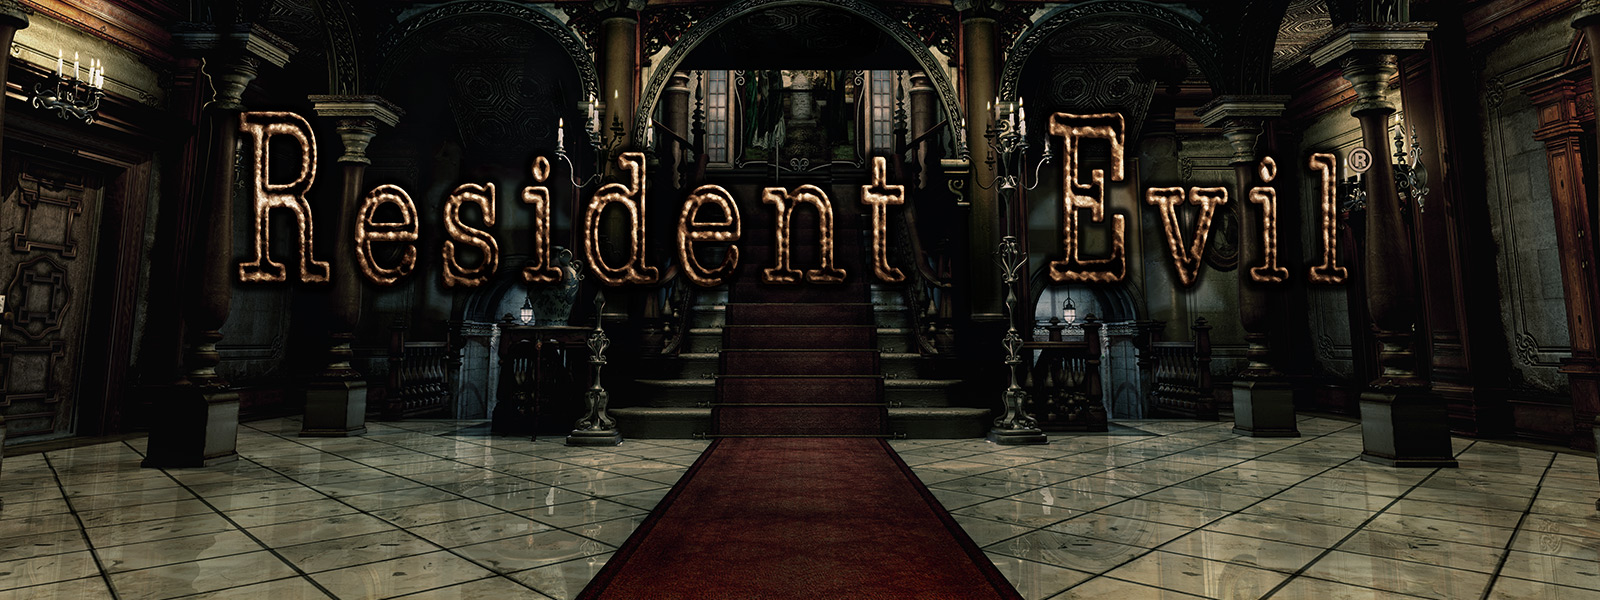 Resident Evil，雄偉的拱門通道，樓梯舖著紅地毯的場景